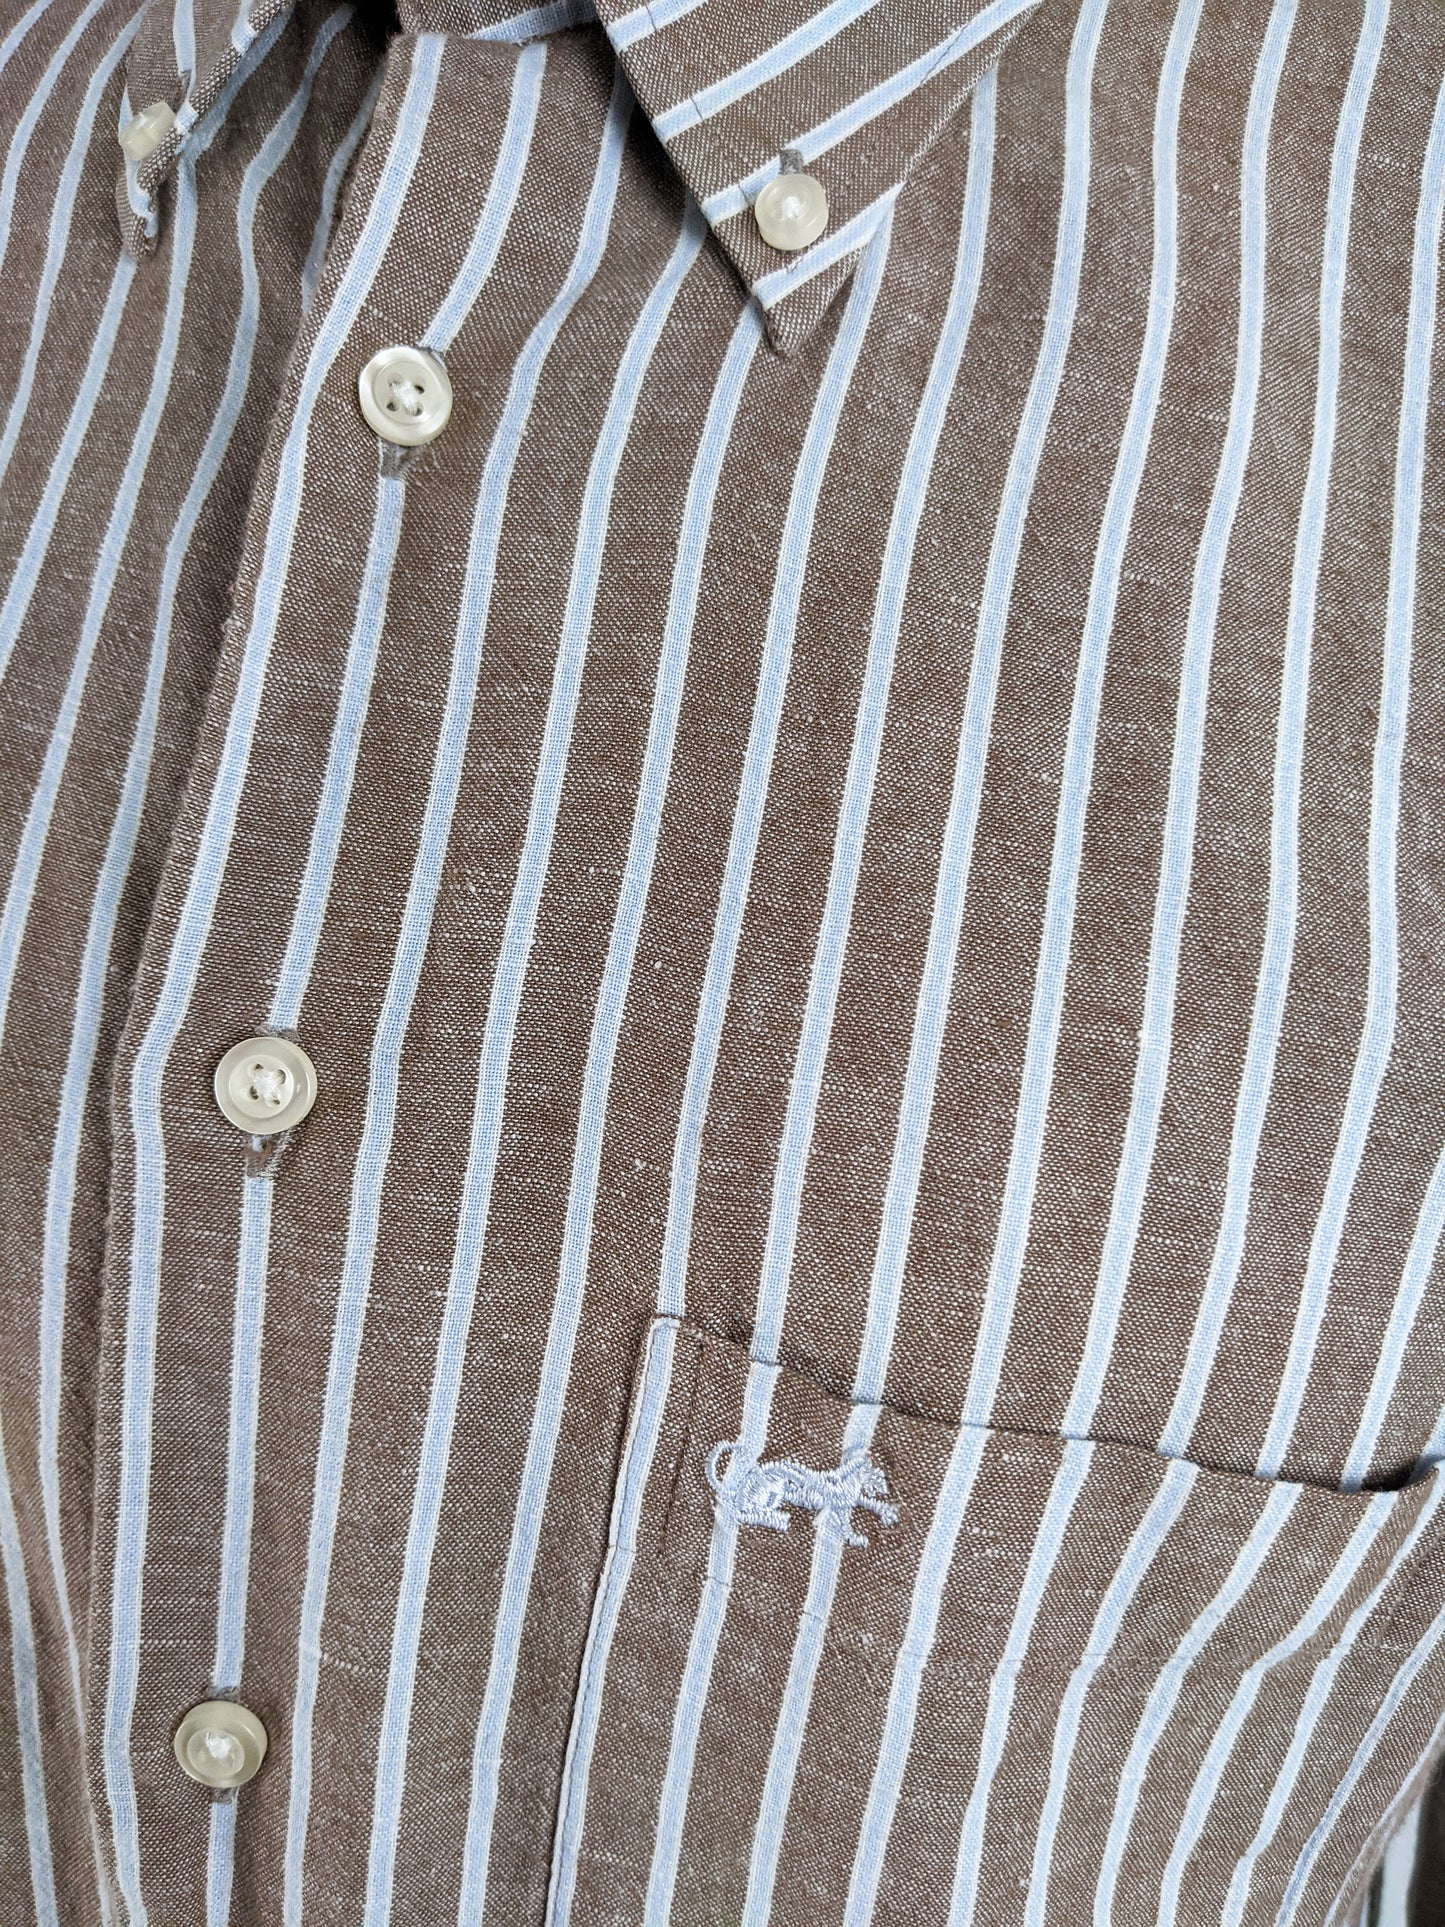 Krizia Vintage Mens Long Sleeve Striped Shirt, 1990s